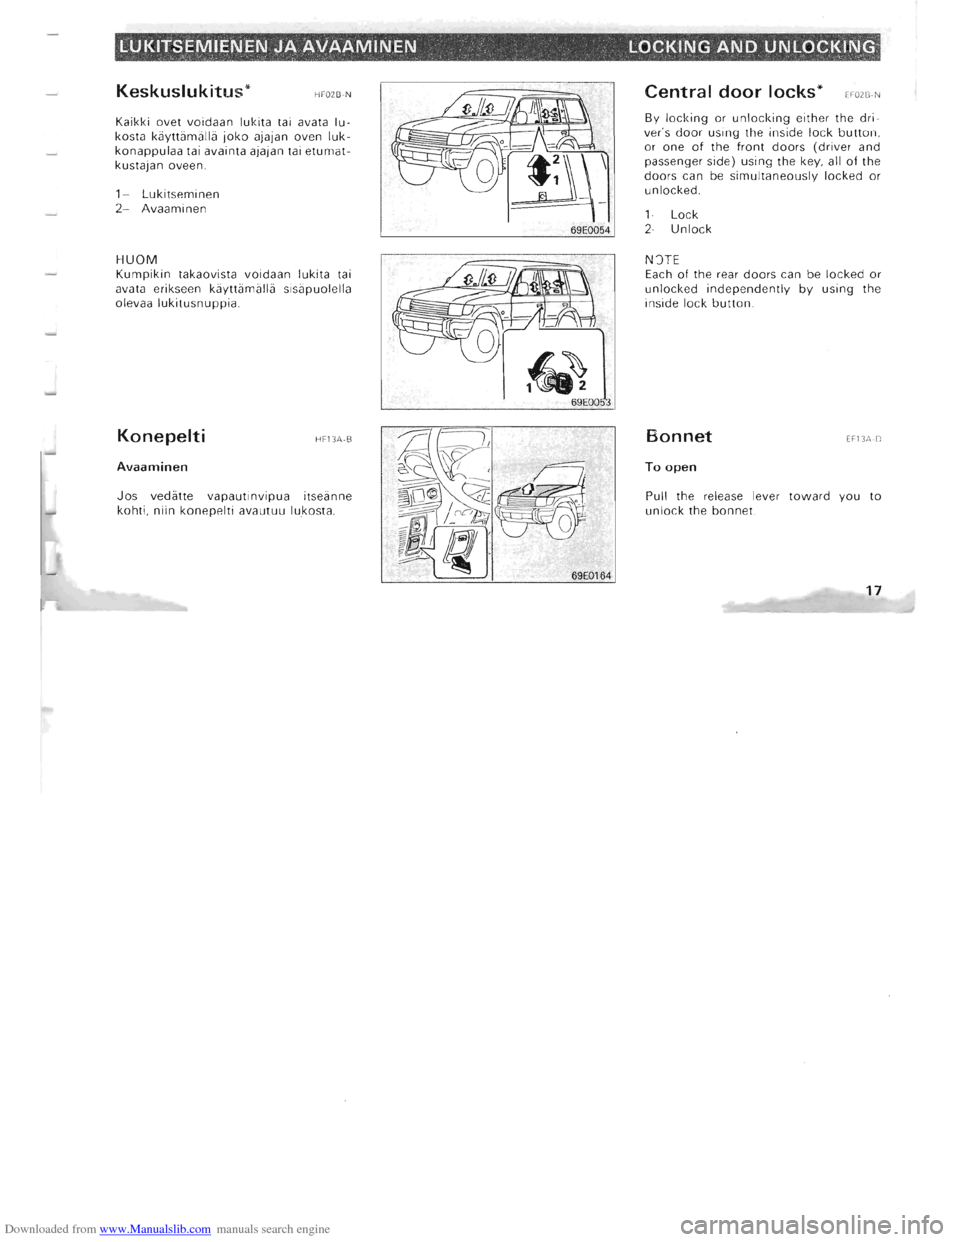 MITSUBISHI PAJERO 1996 2.G Owners Manual Downloaded from www.Manualslib.com manuals search engine LUKITSEMIENEN JA AVAAMINEN LOCKING AND UNLOCKING: " ,t ", • I. ",,, 
Keskuslukitus* HF02B·N 
Kaikki  ovet voidaan  lukita tai avata lu